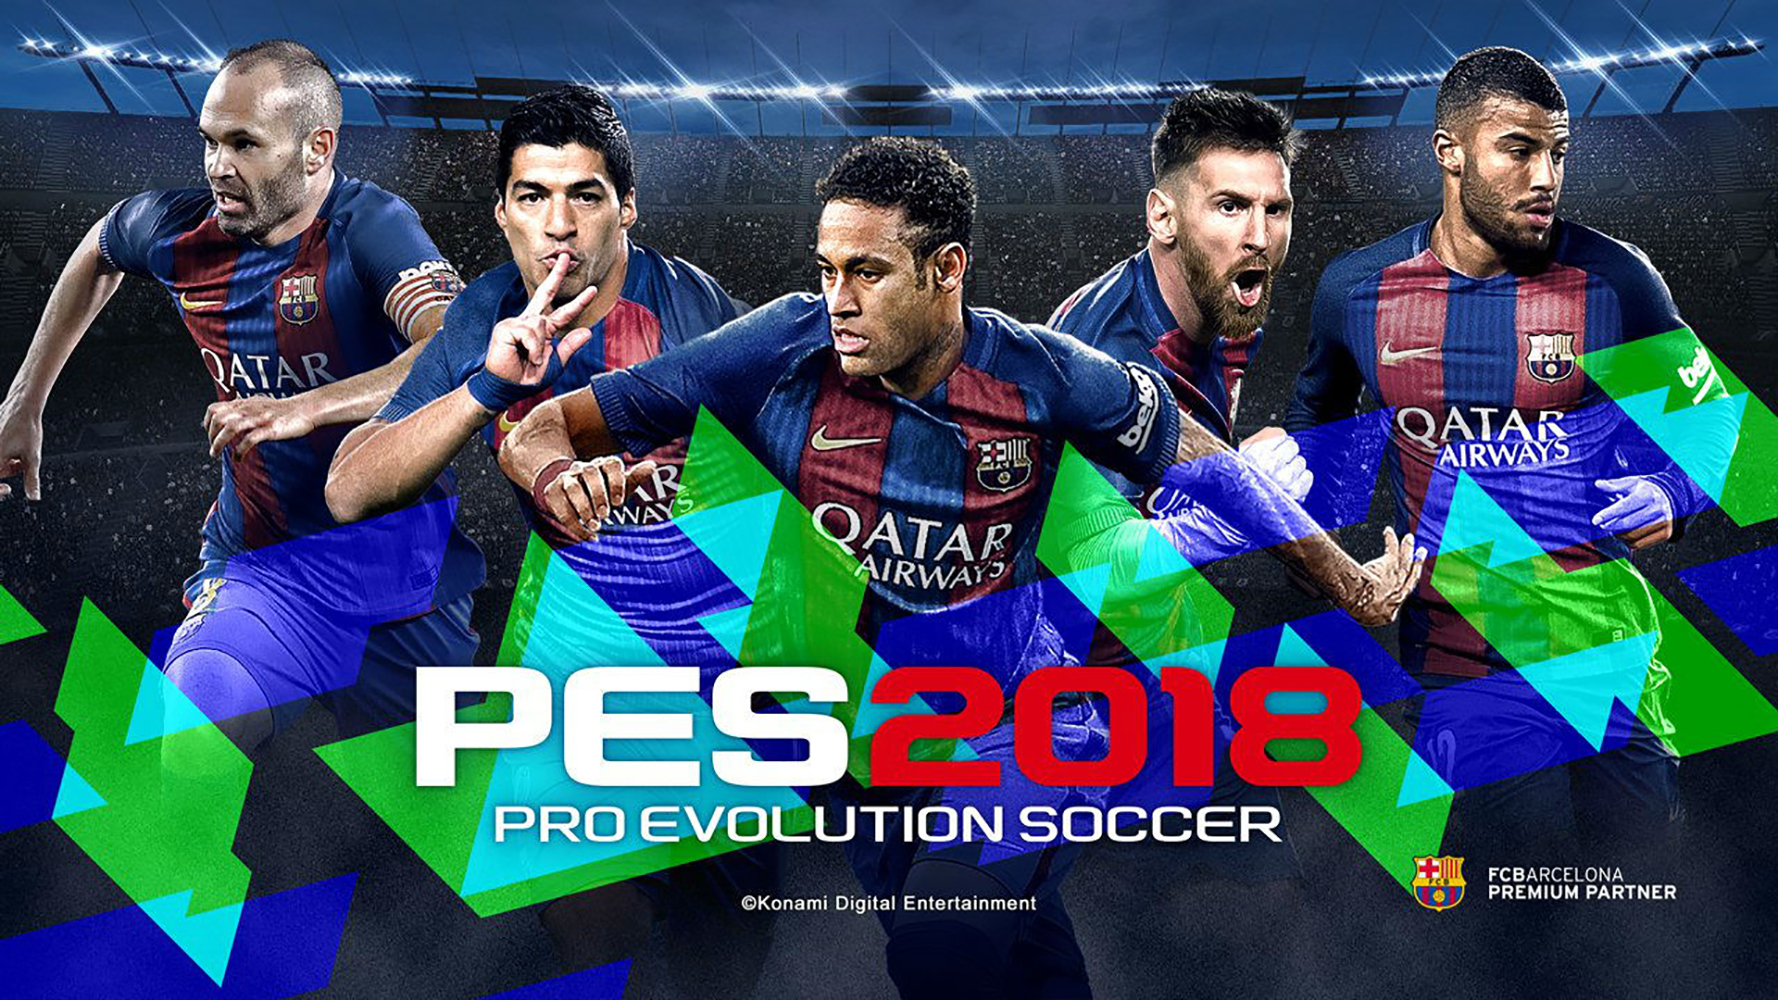 Video Game Pro Evolution Soccer 2018 HD Wallpaper | Background Image